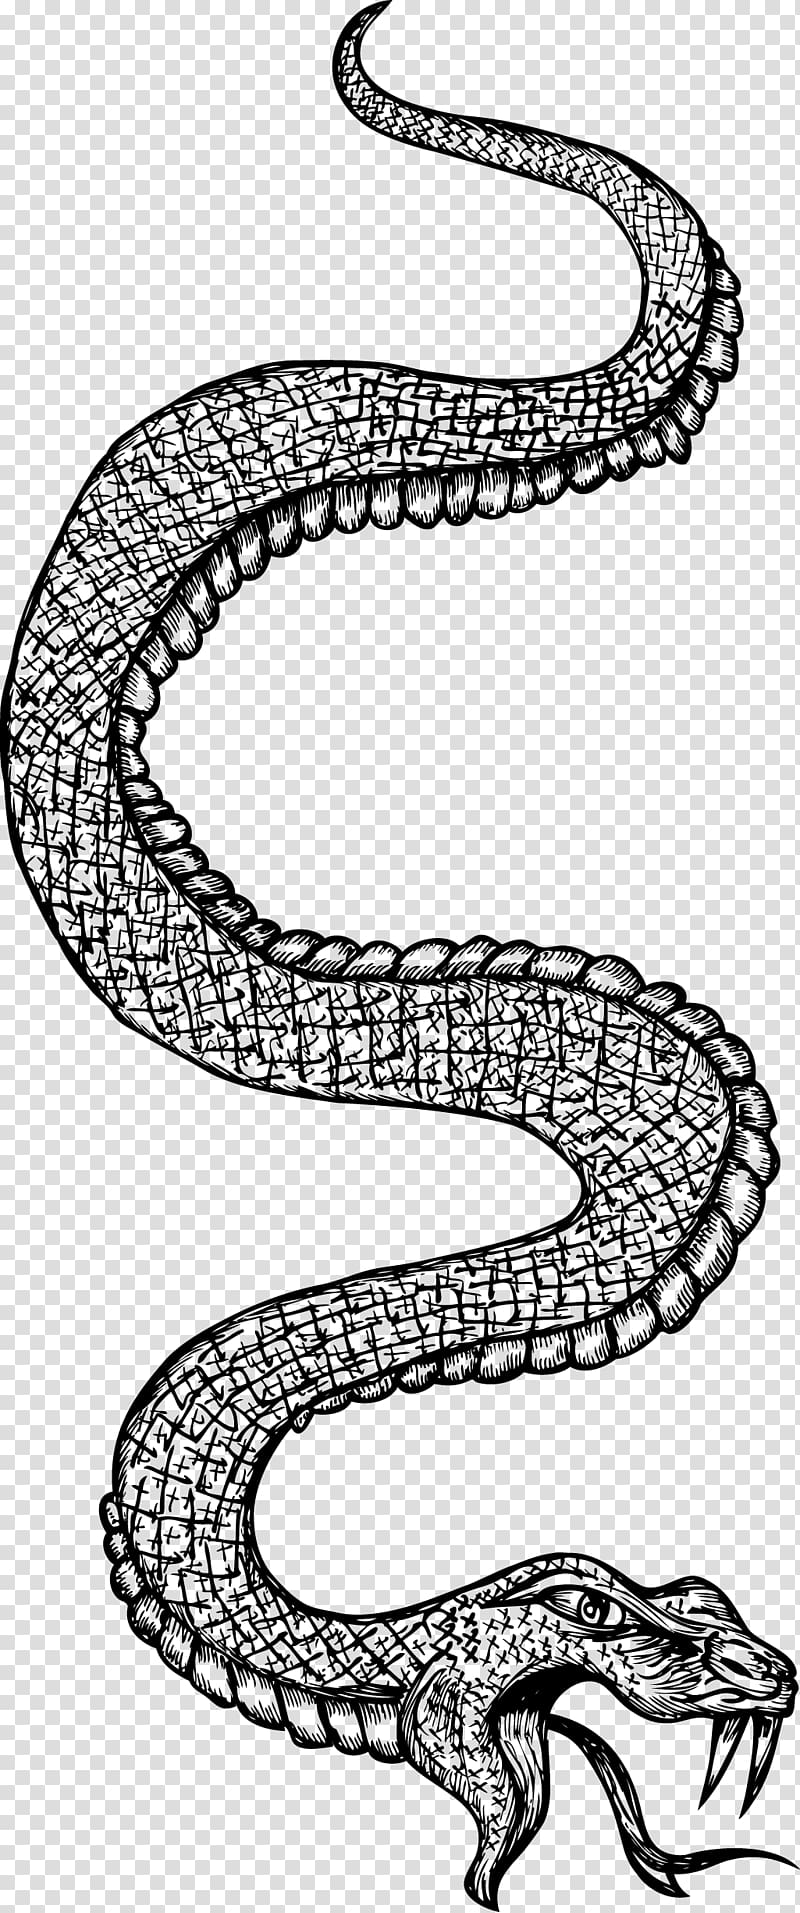 Snake Black and white Line art, snake transparent background PNG clipart